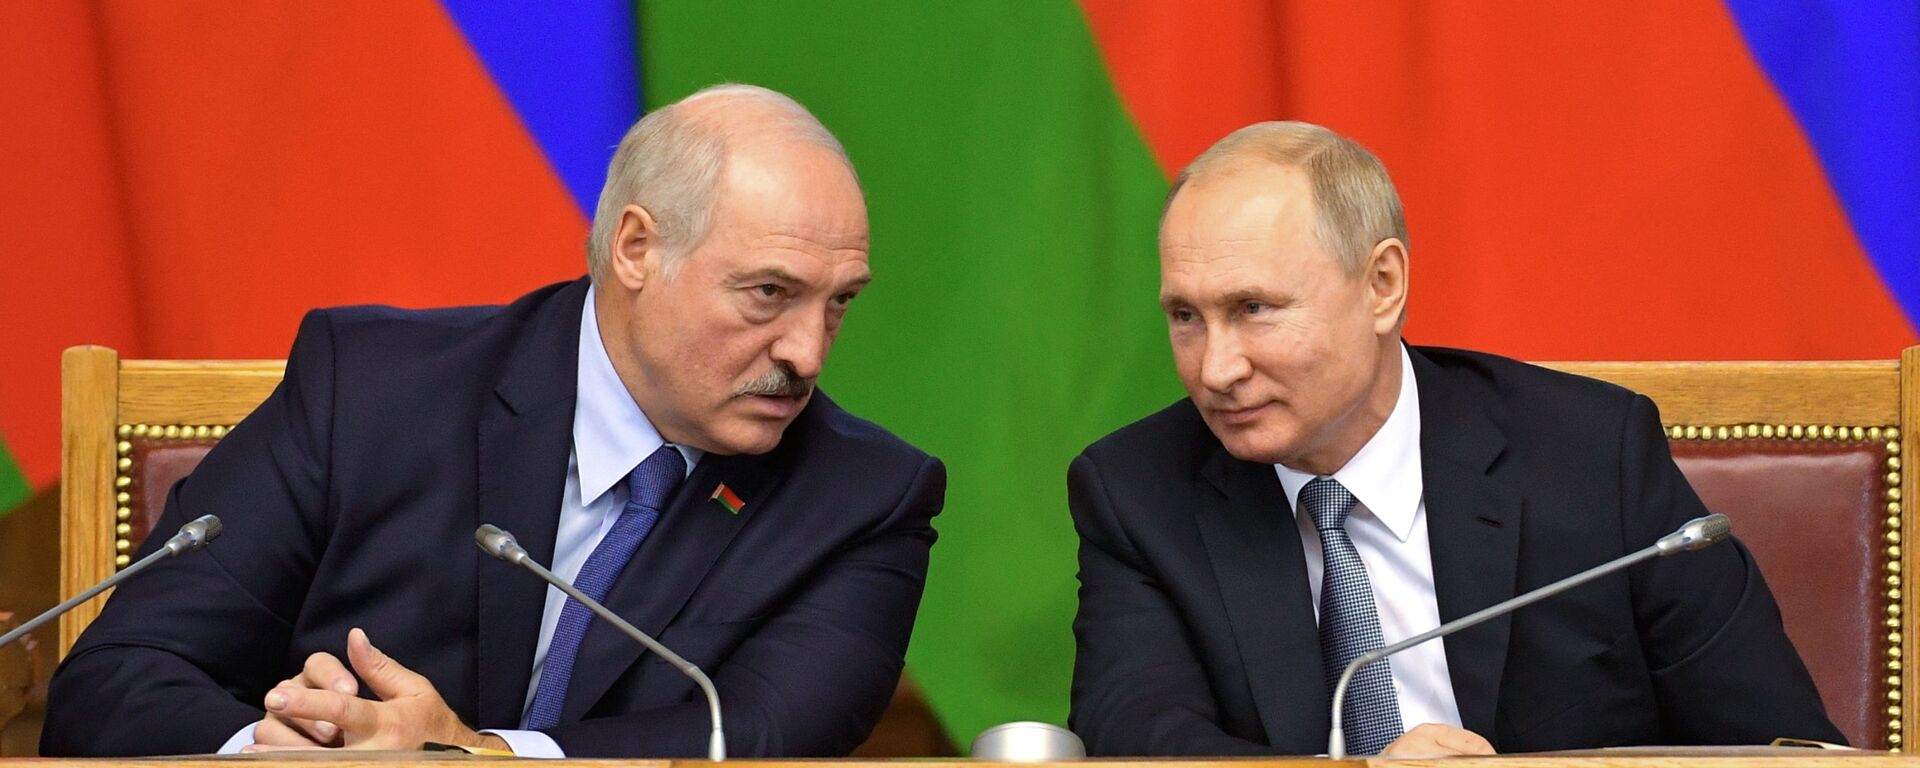 El presidente de Bielorrusia, Alexandr Lukashenko, y el presidente de Rusia, Vladímir Putin - Sputnik Mundo, 1920, 06.11.2019